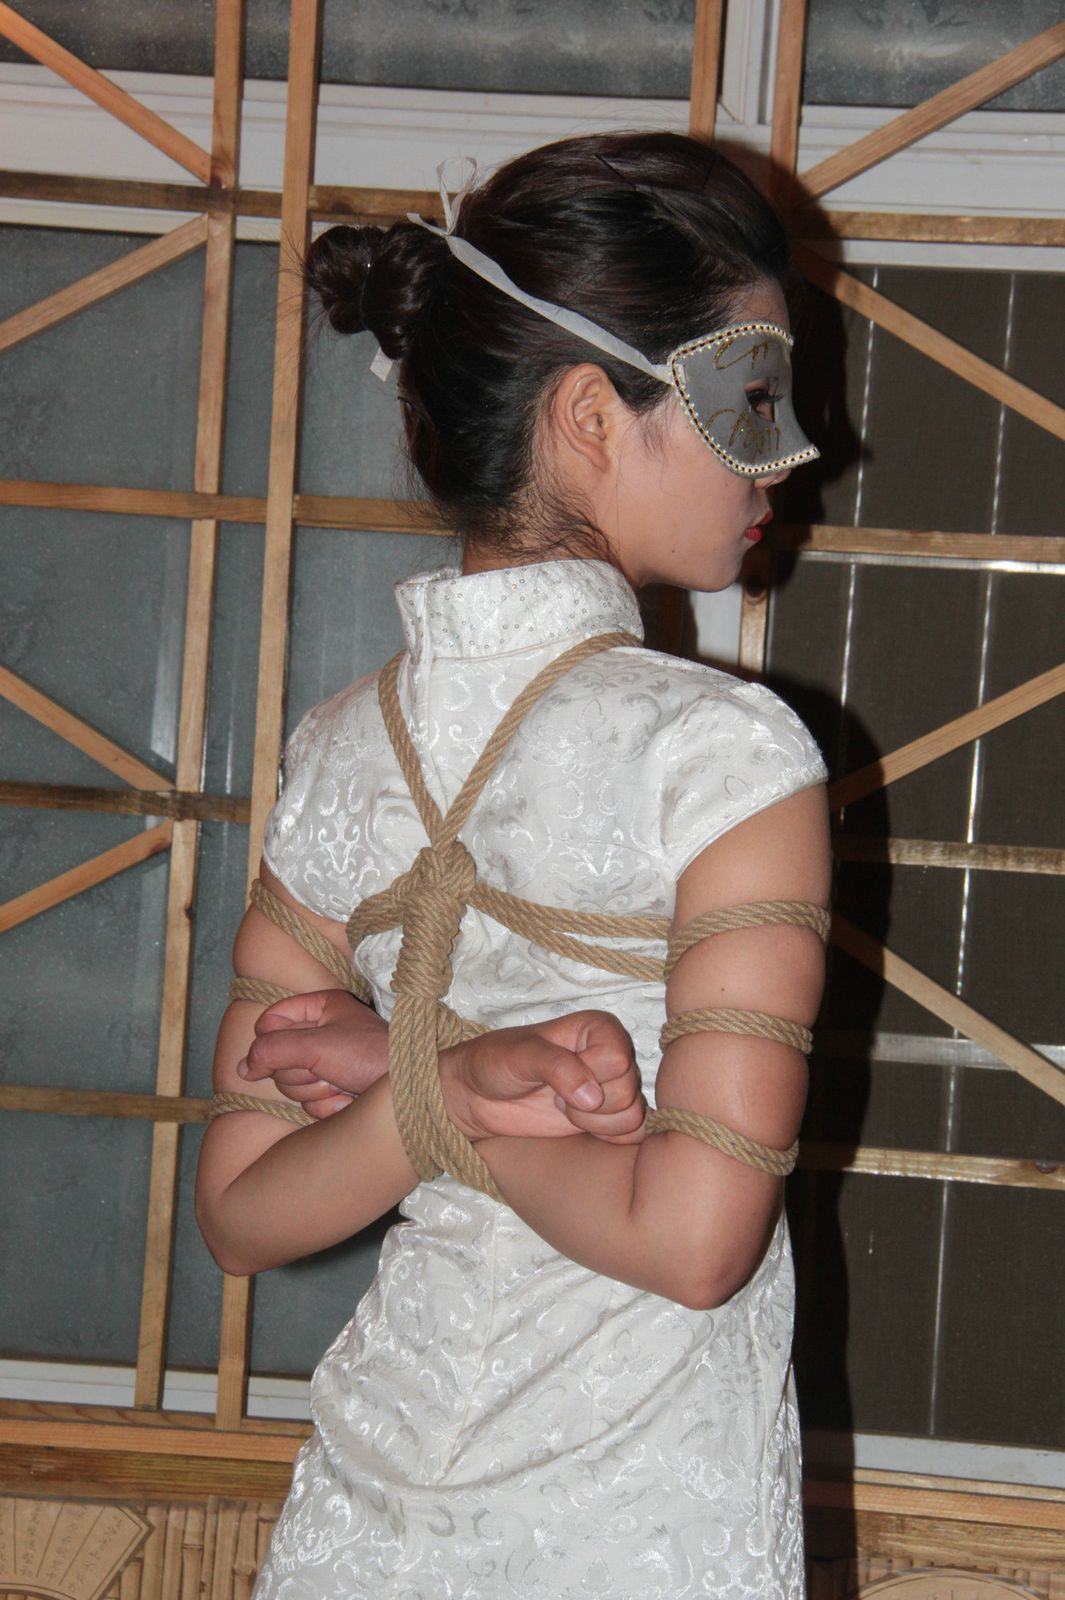 Chinese Slave Girl Training Camp 214